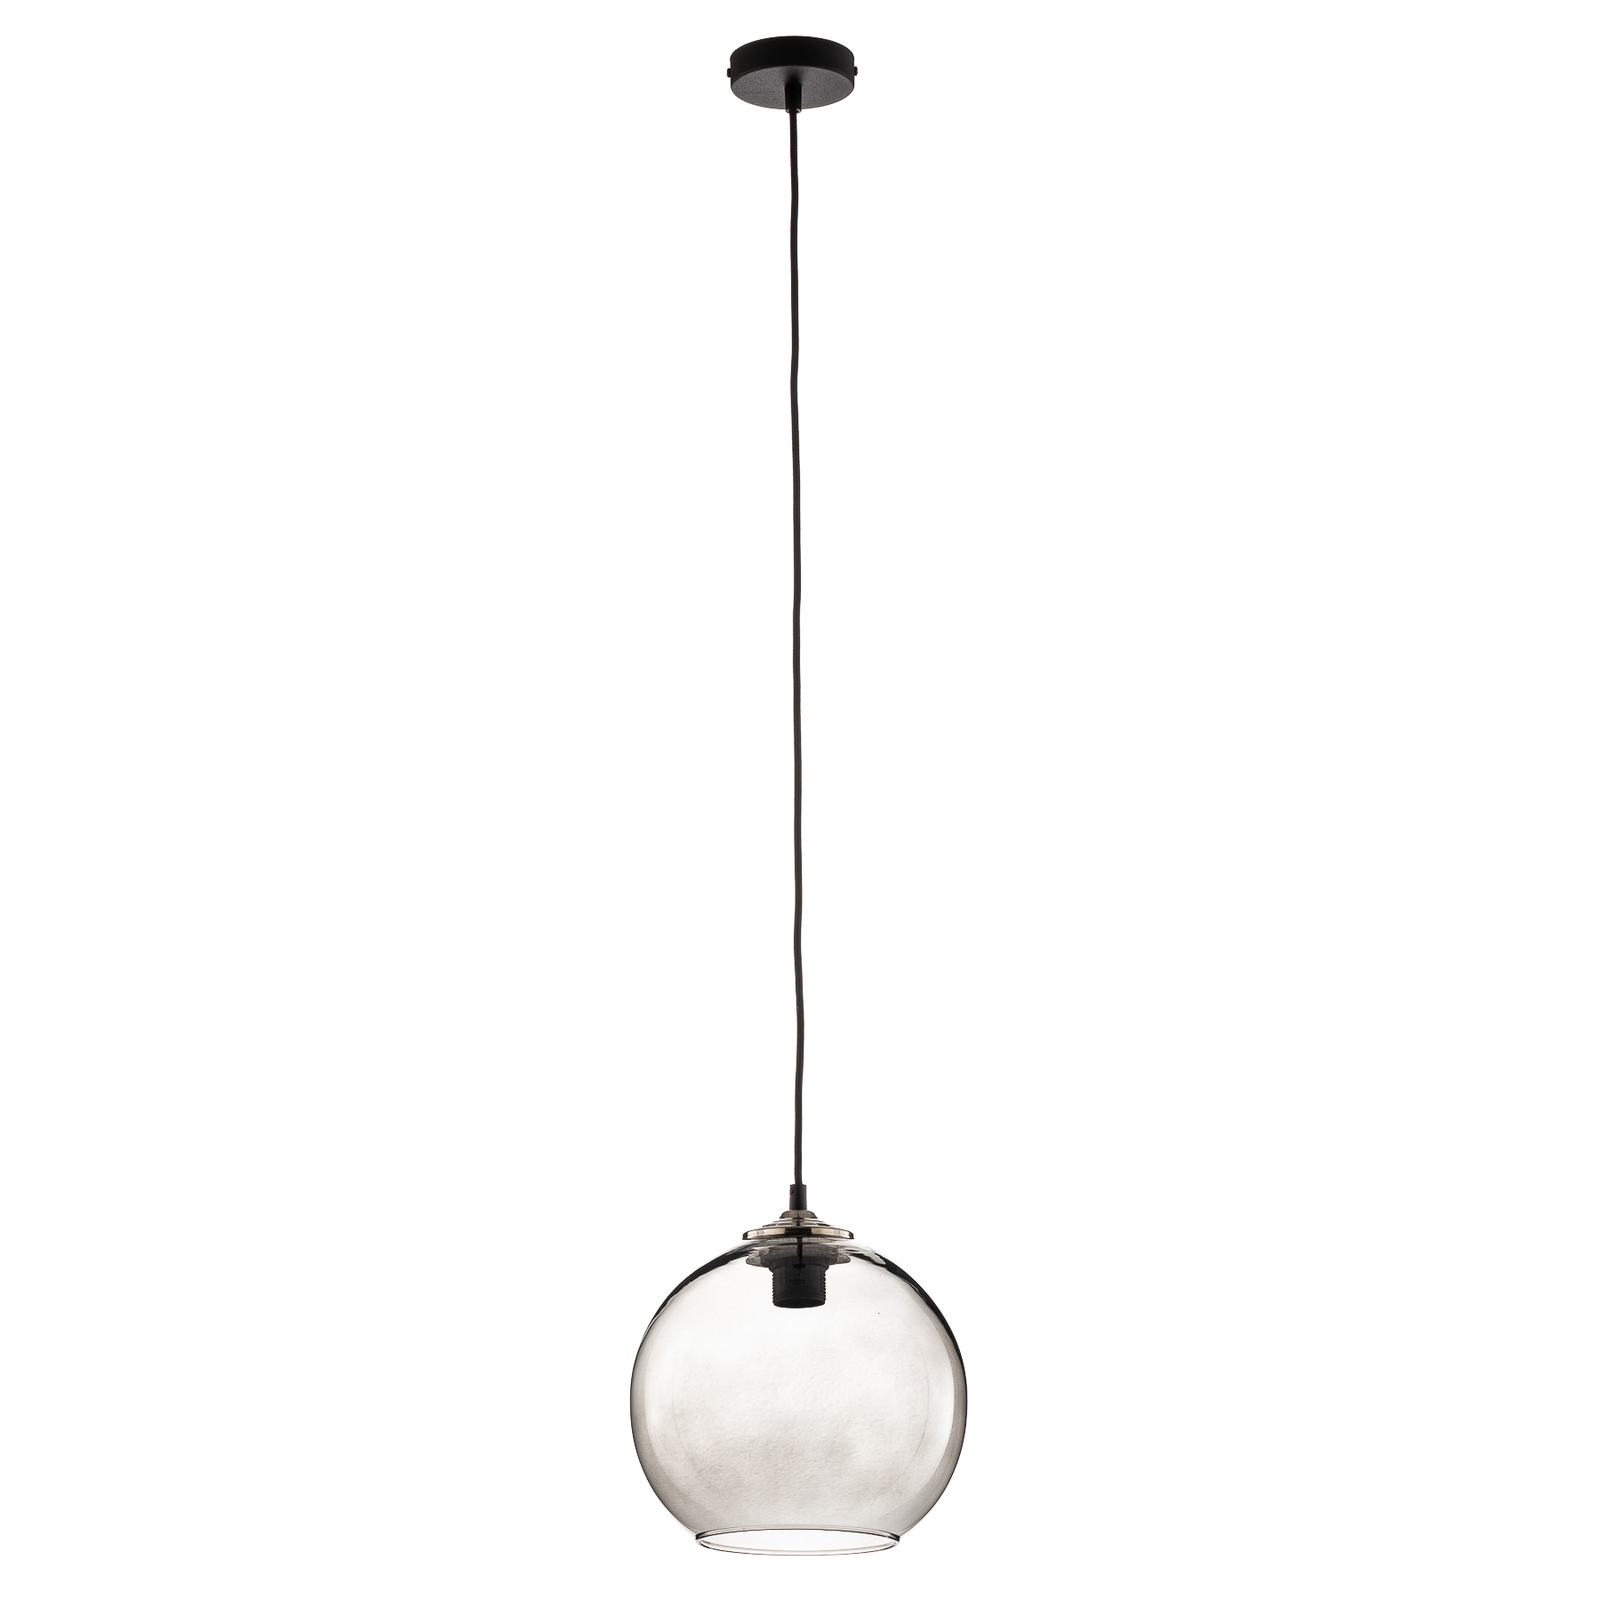 Hanging light ball glass ball shade smoke grey Ø25cm